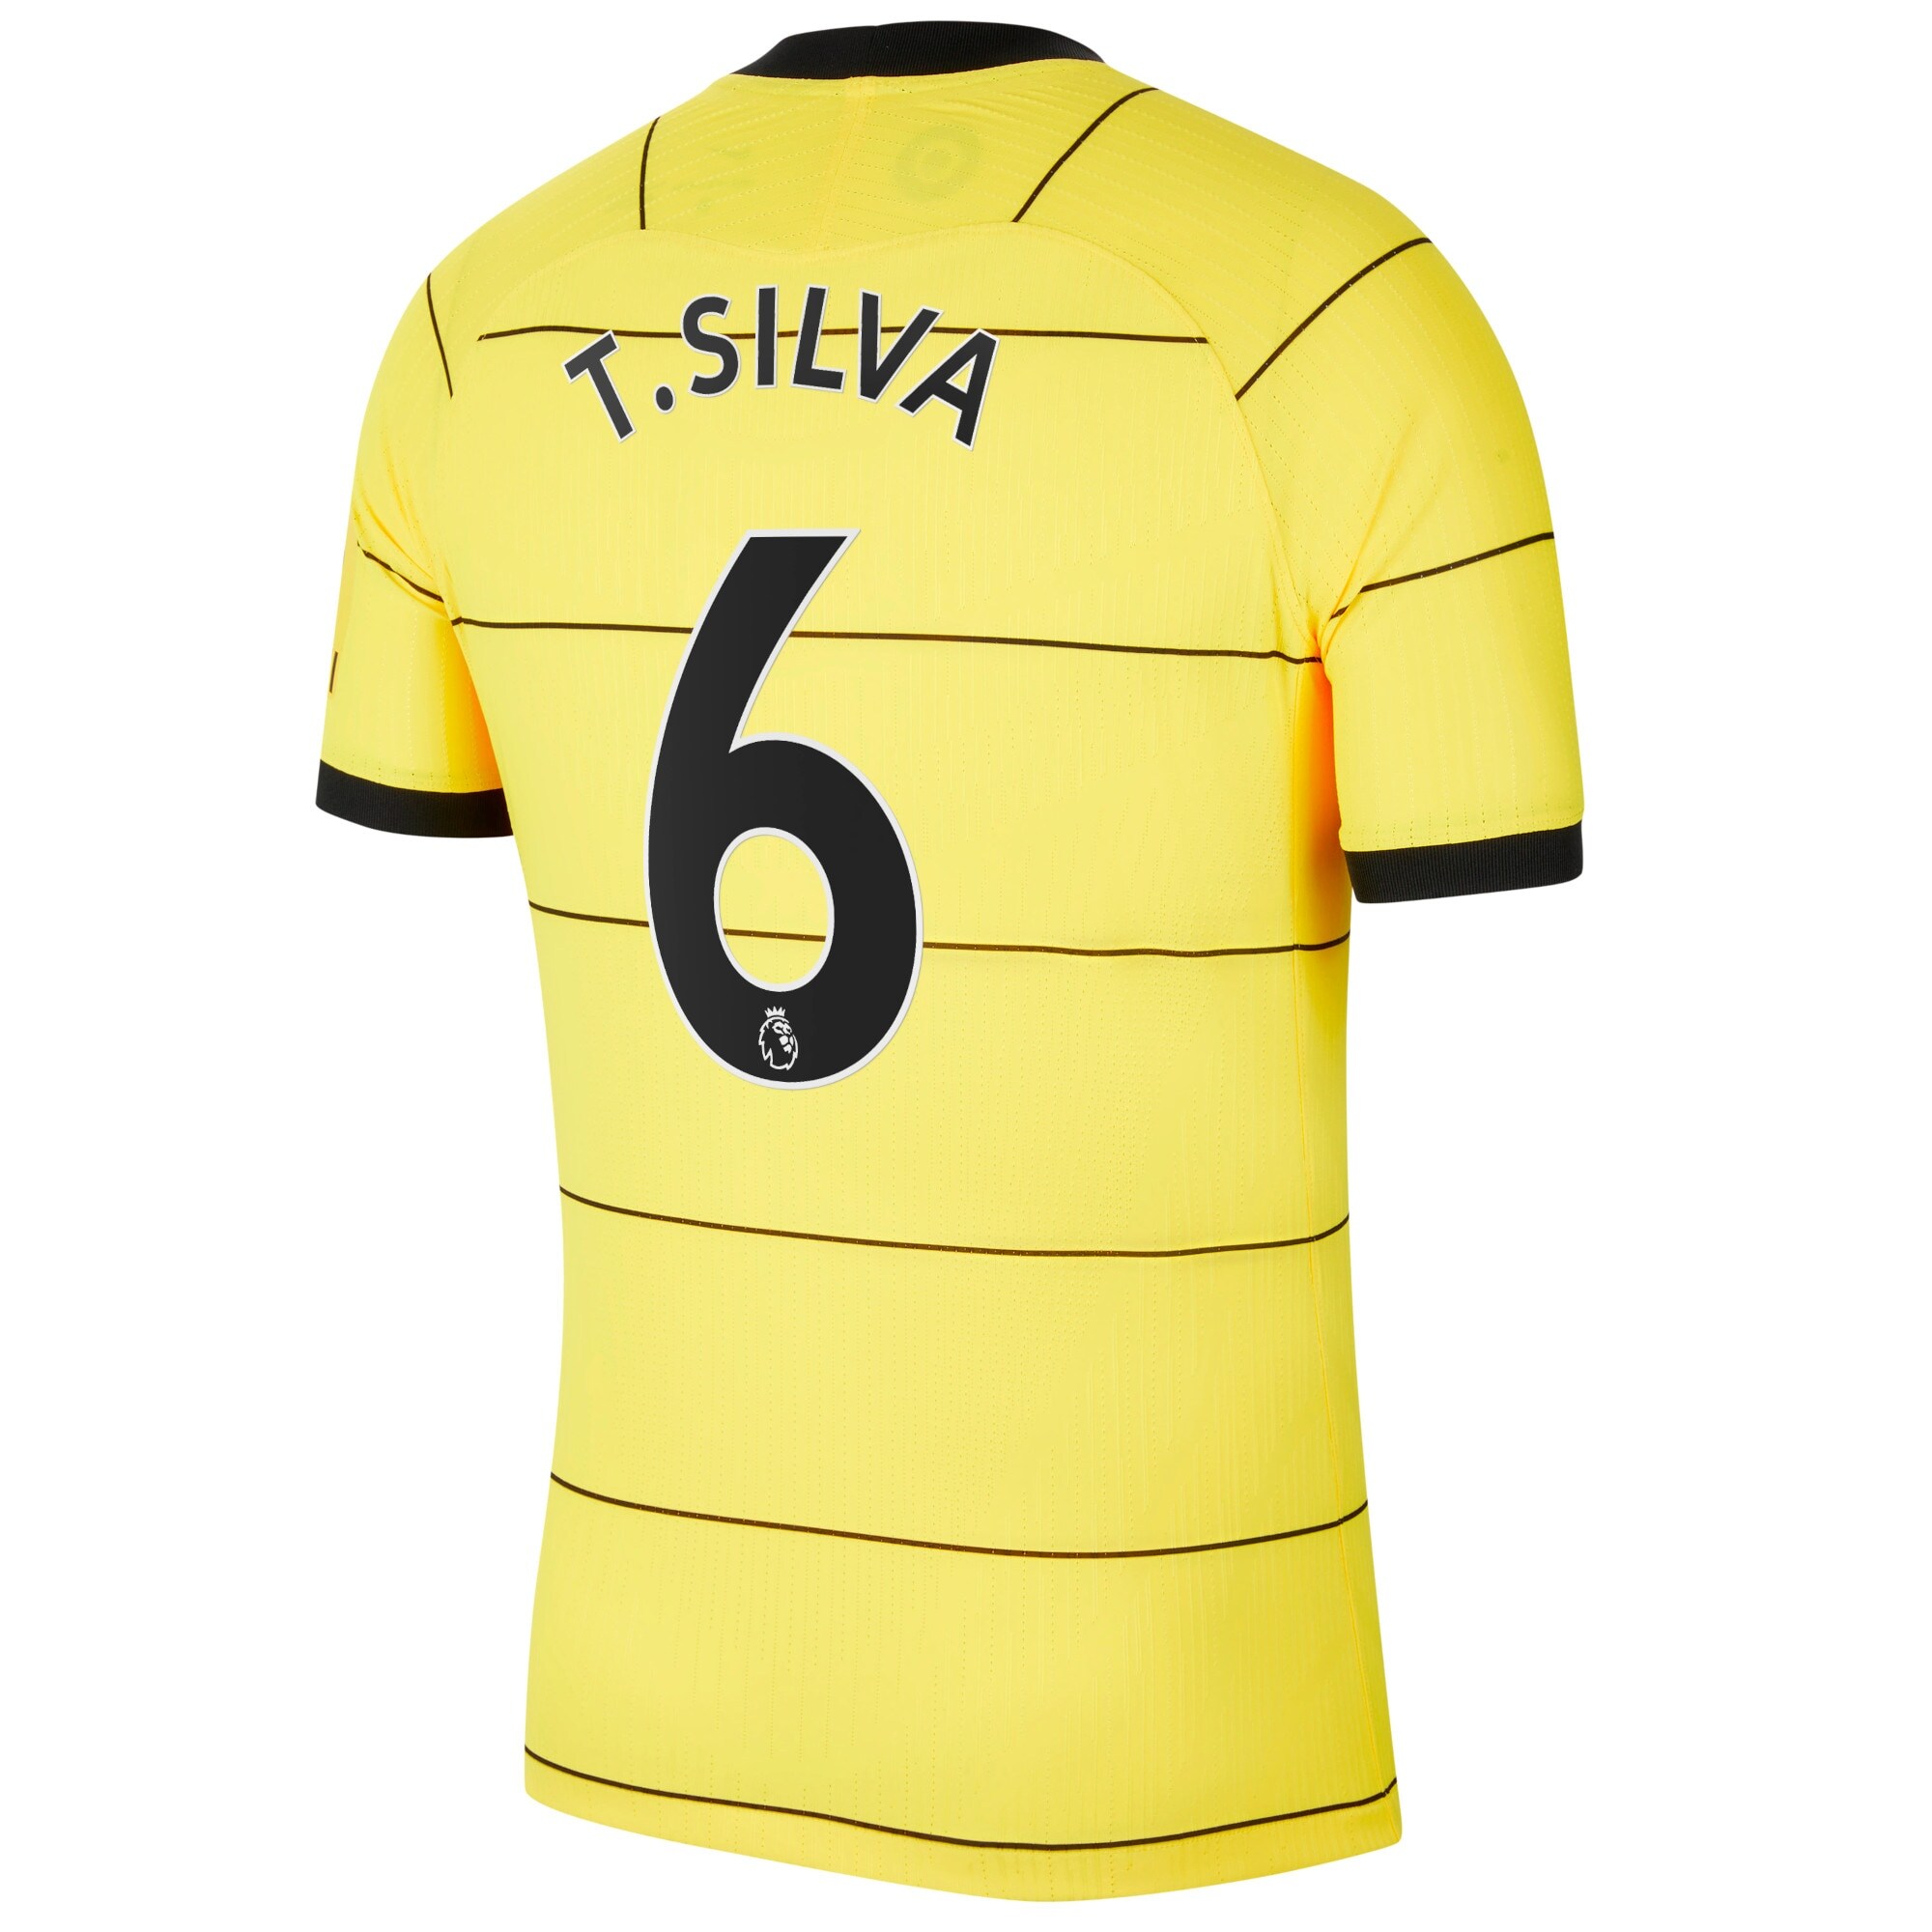 Chelsea Away Vapor Match Shirt 2021-22 with T. Silva 6 printing